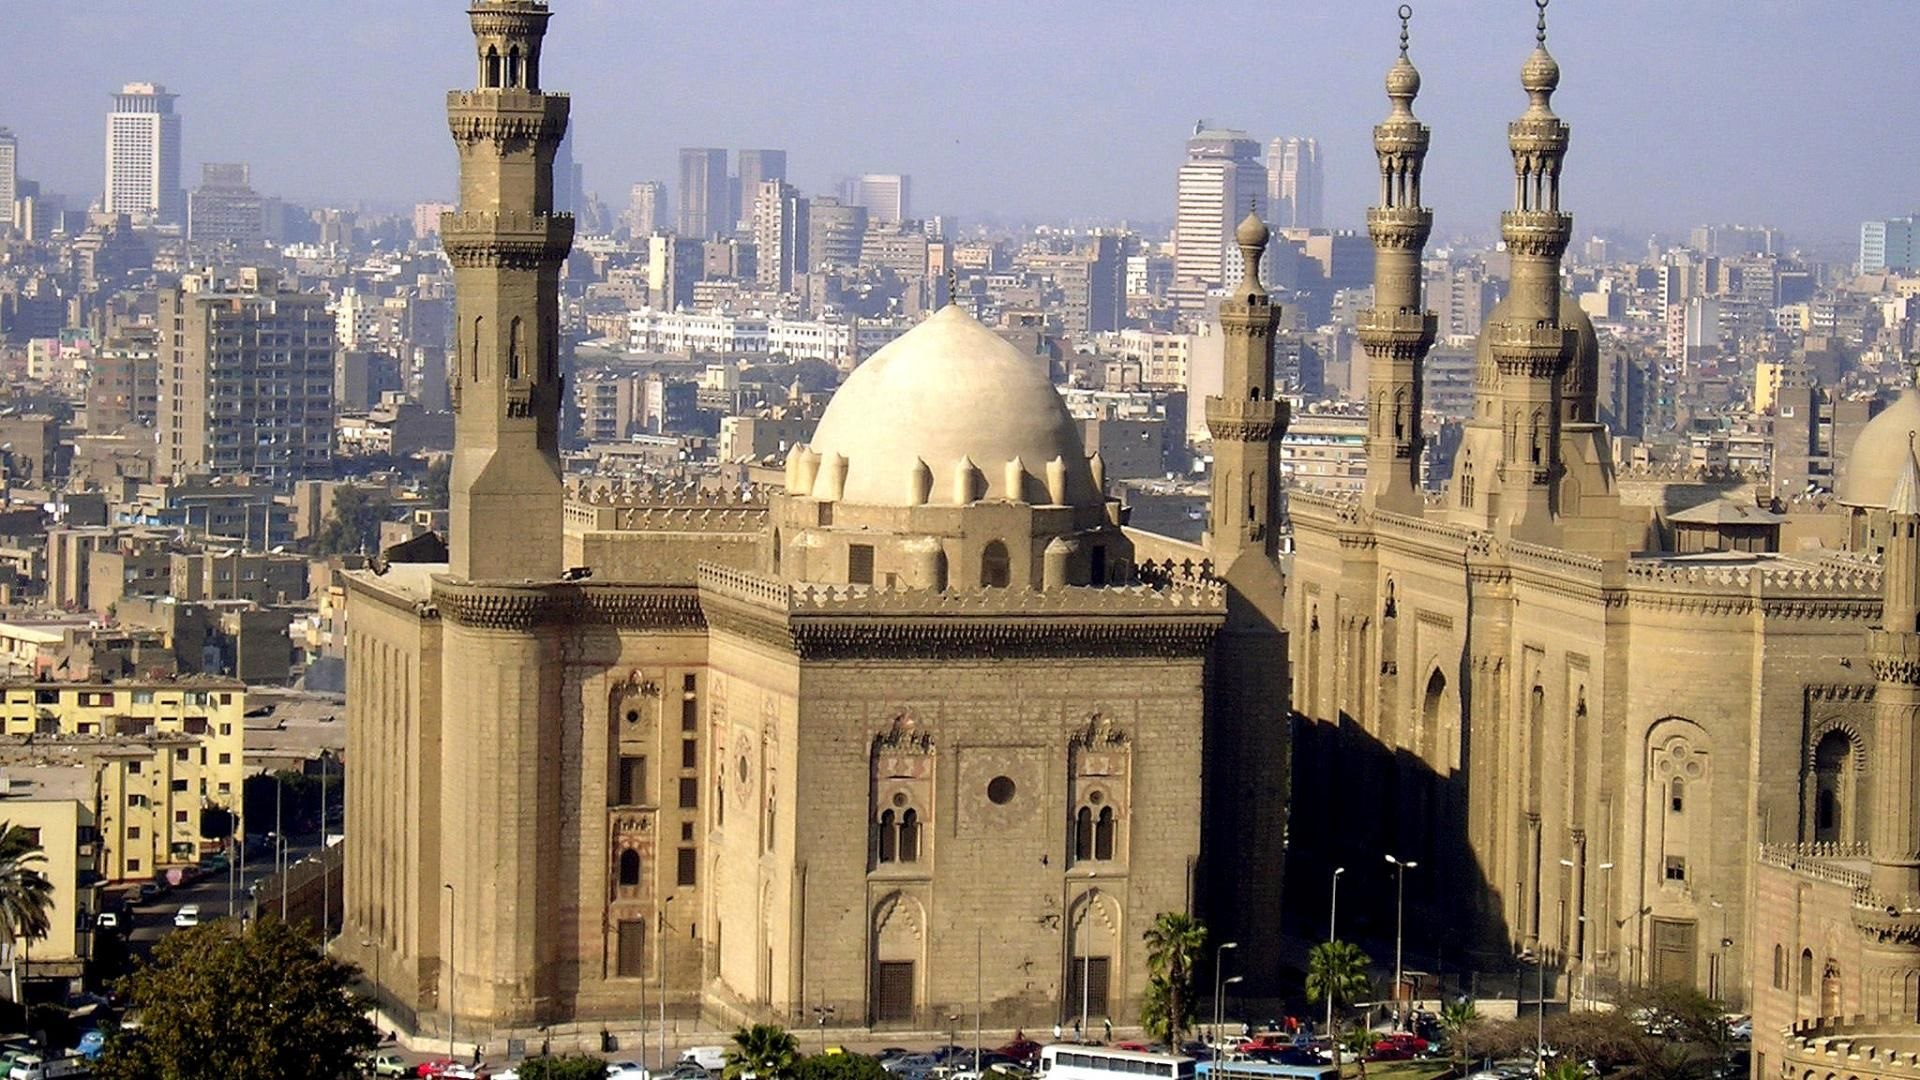 Часть большого каира 4 буквы. Мечеть Султана Хасана. Каин. Айванная мечеть Султана Хасана в Каире. Мечеть Султана Хасана Каир 1356-1363 гг. Минарет Хасана Каир.